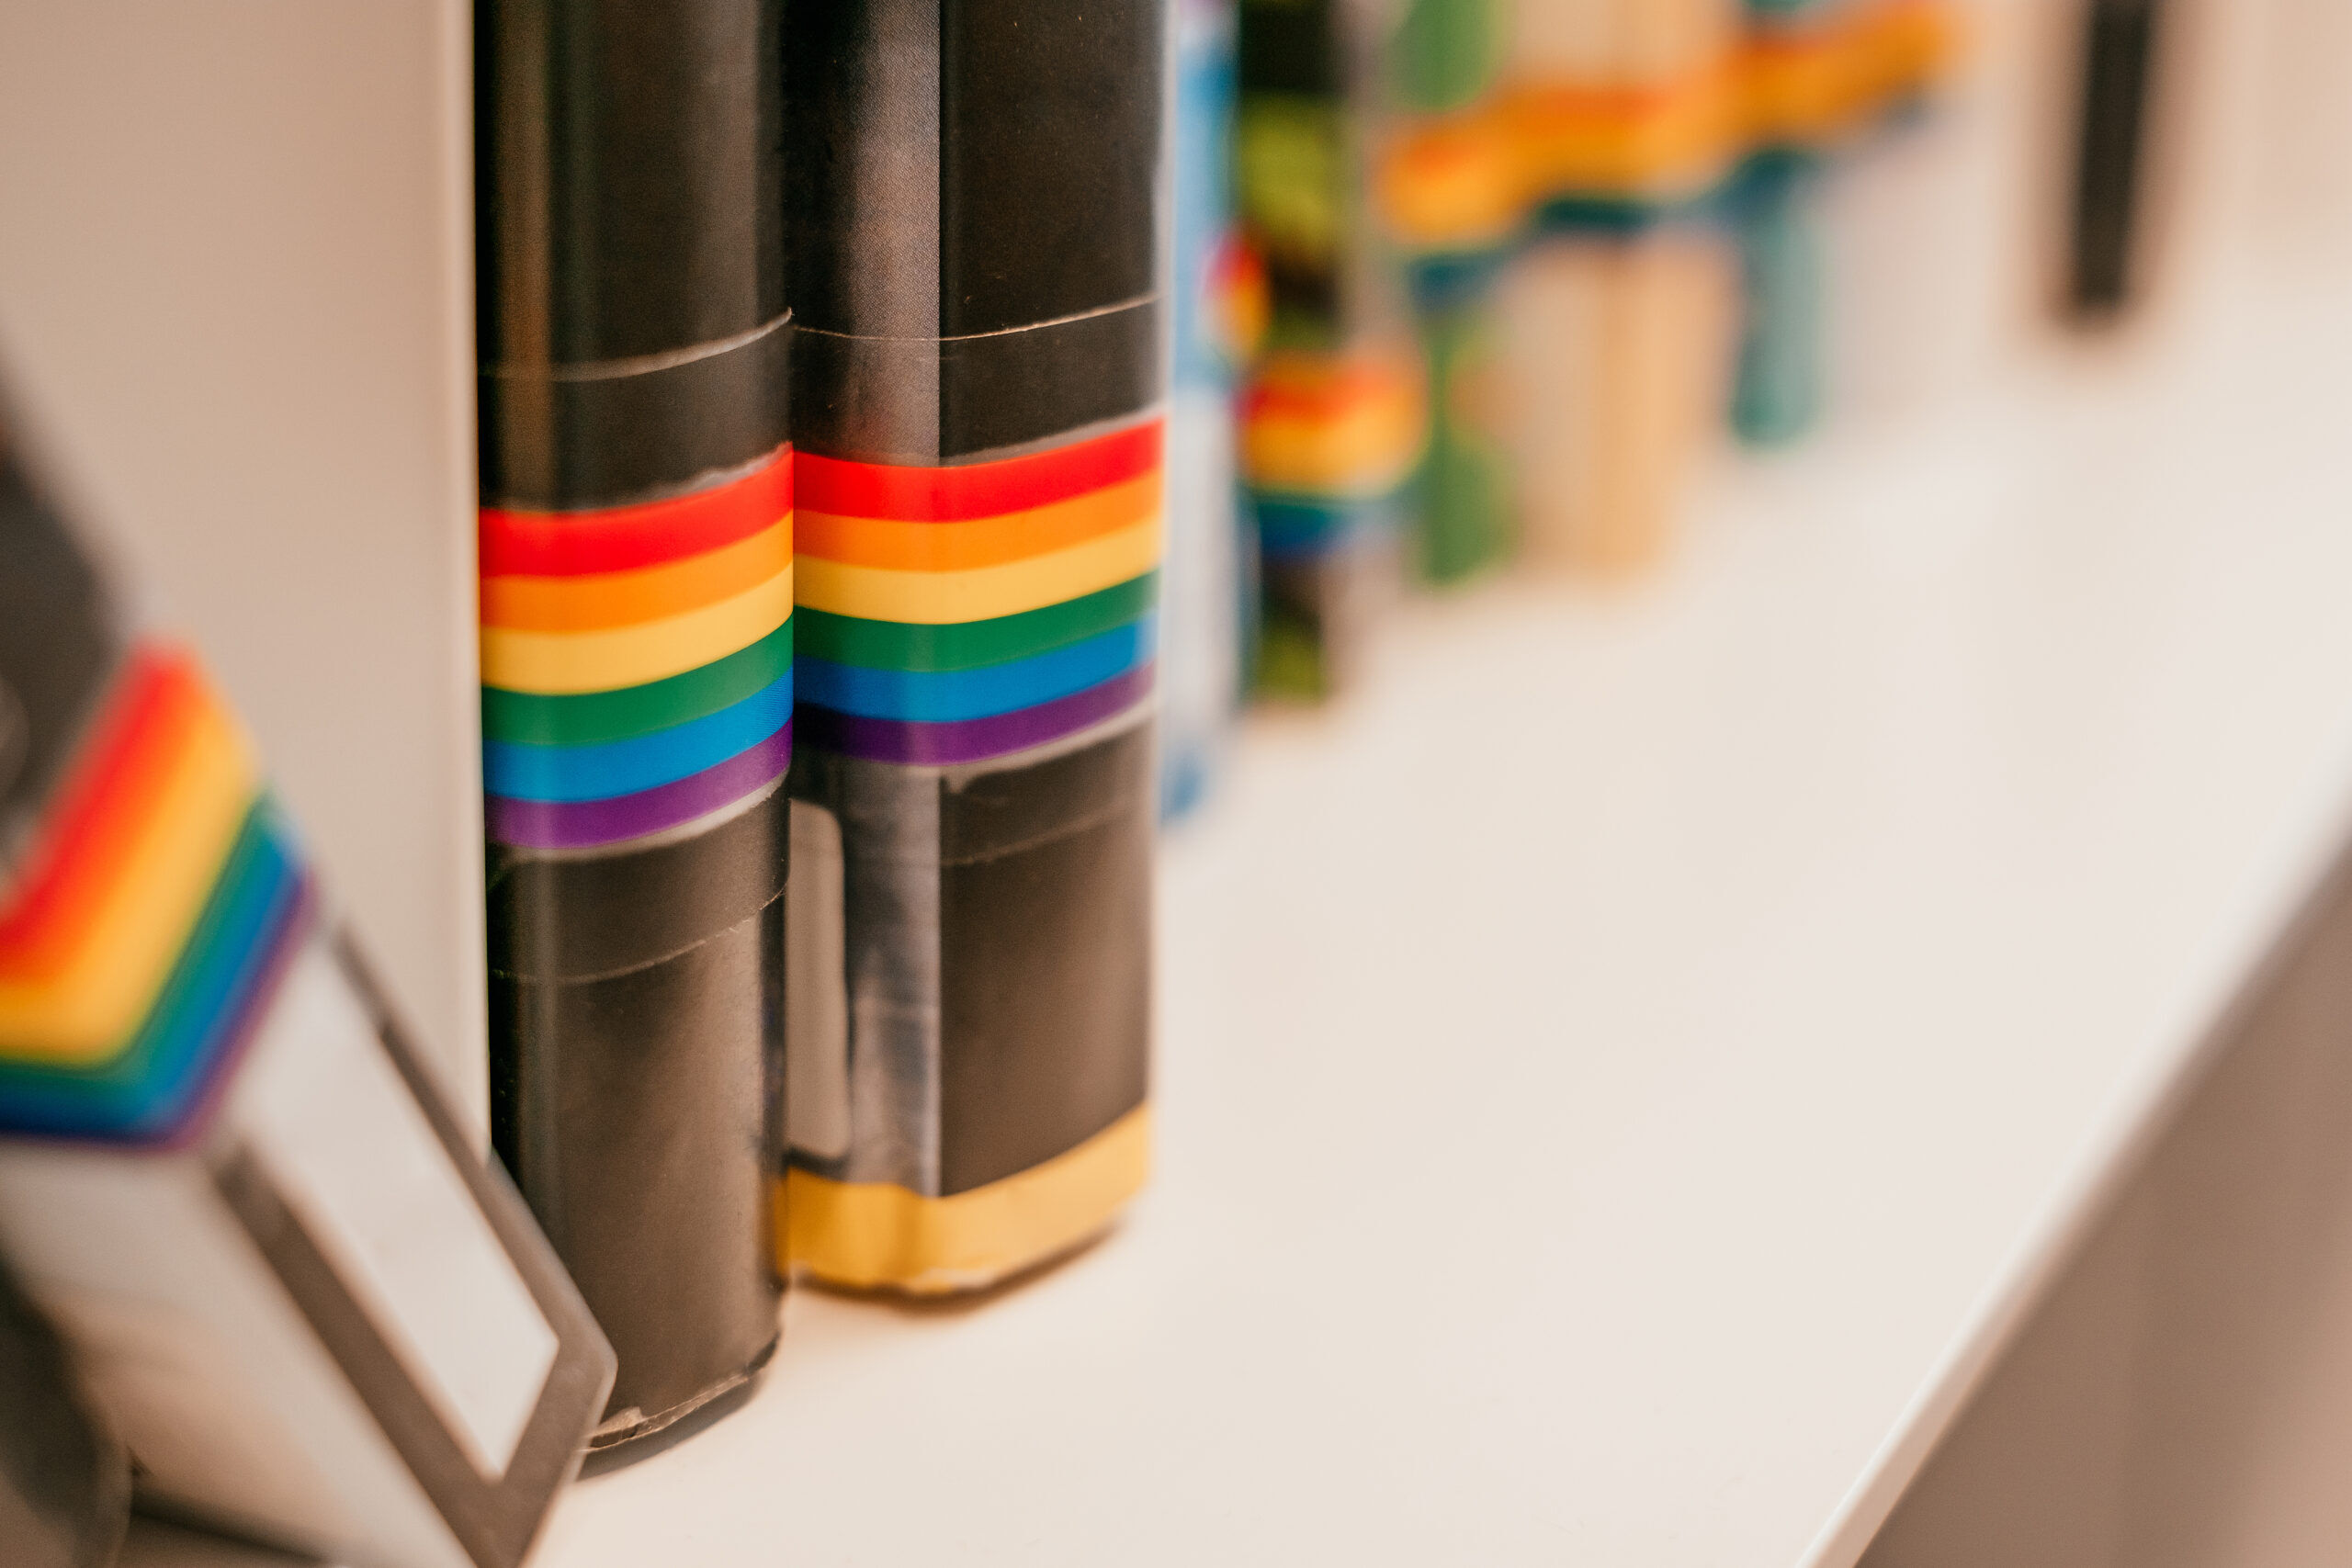 Books with rainbow binding on shelf